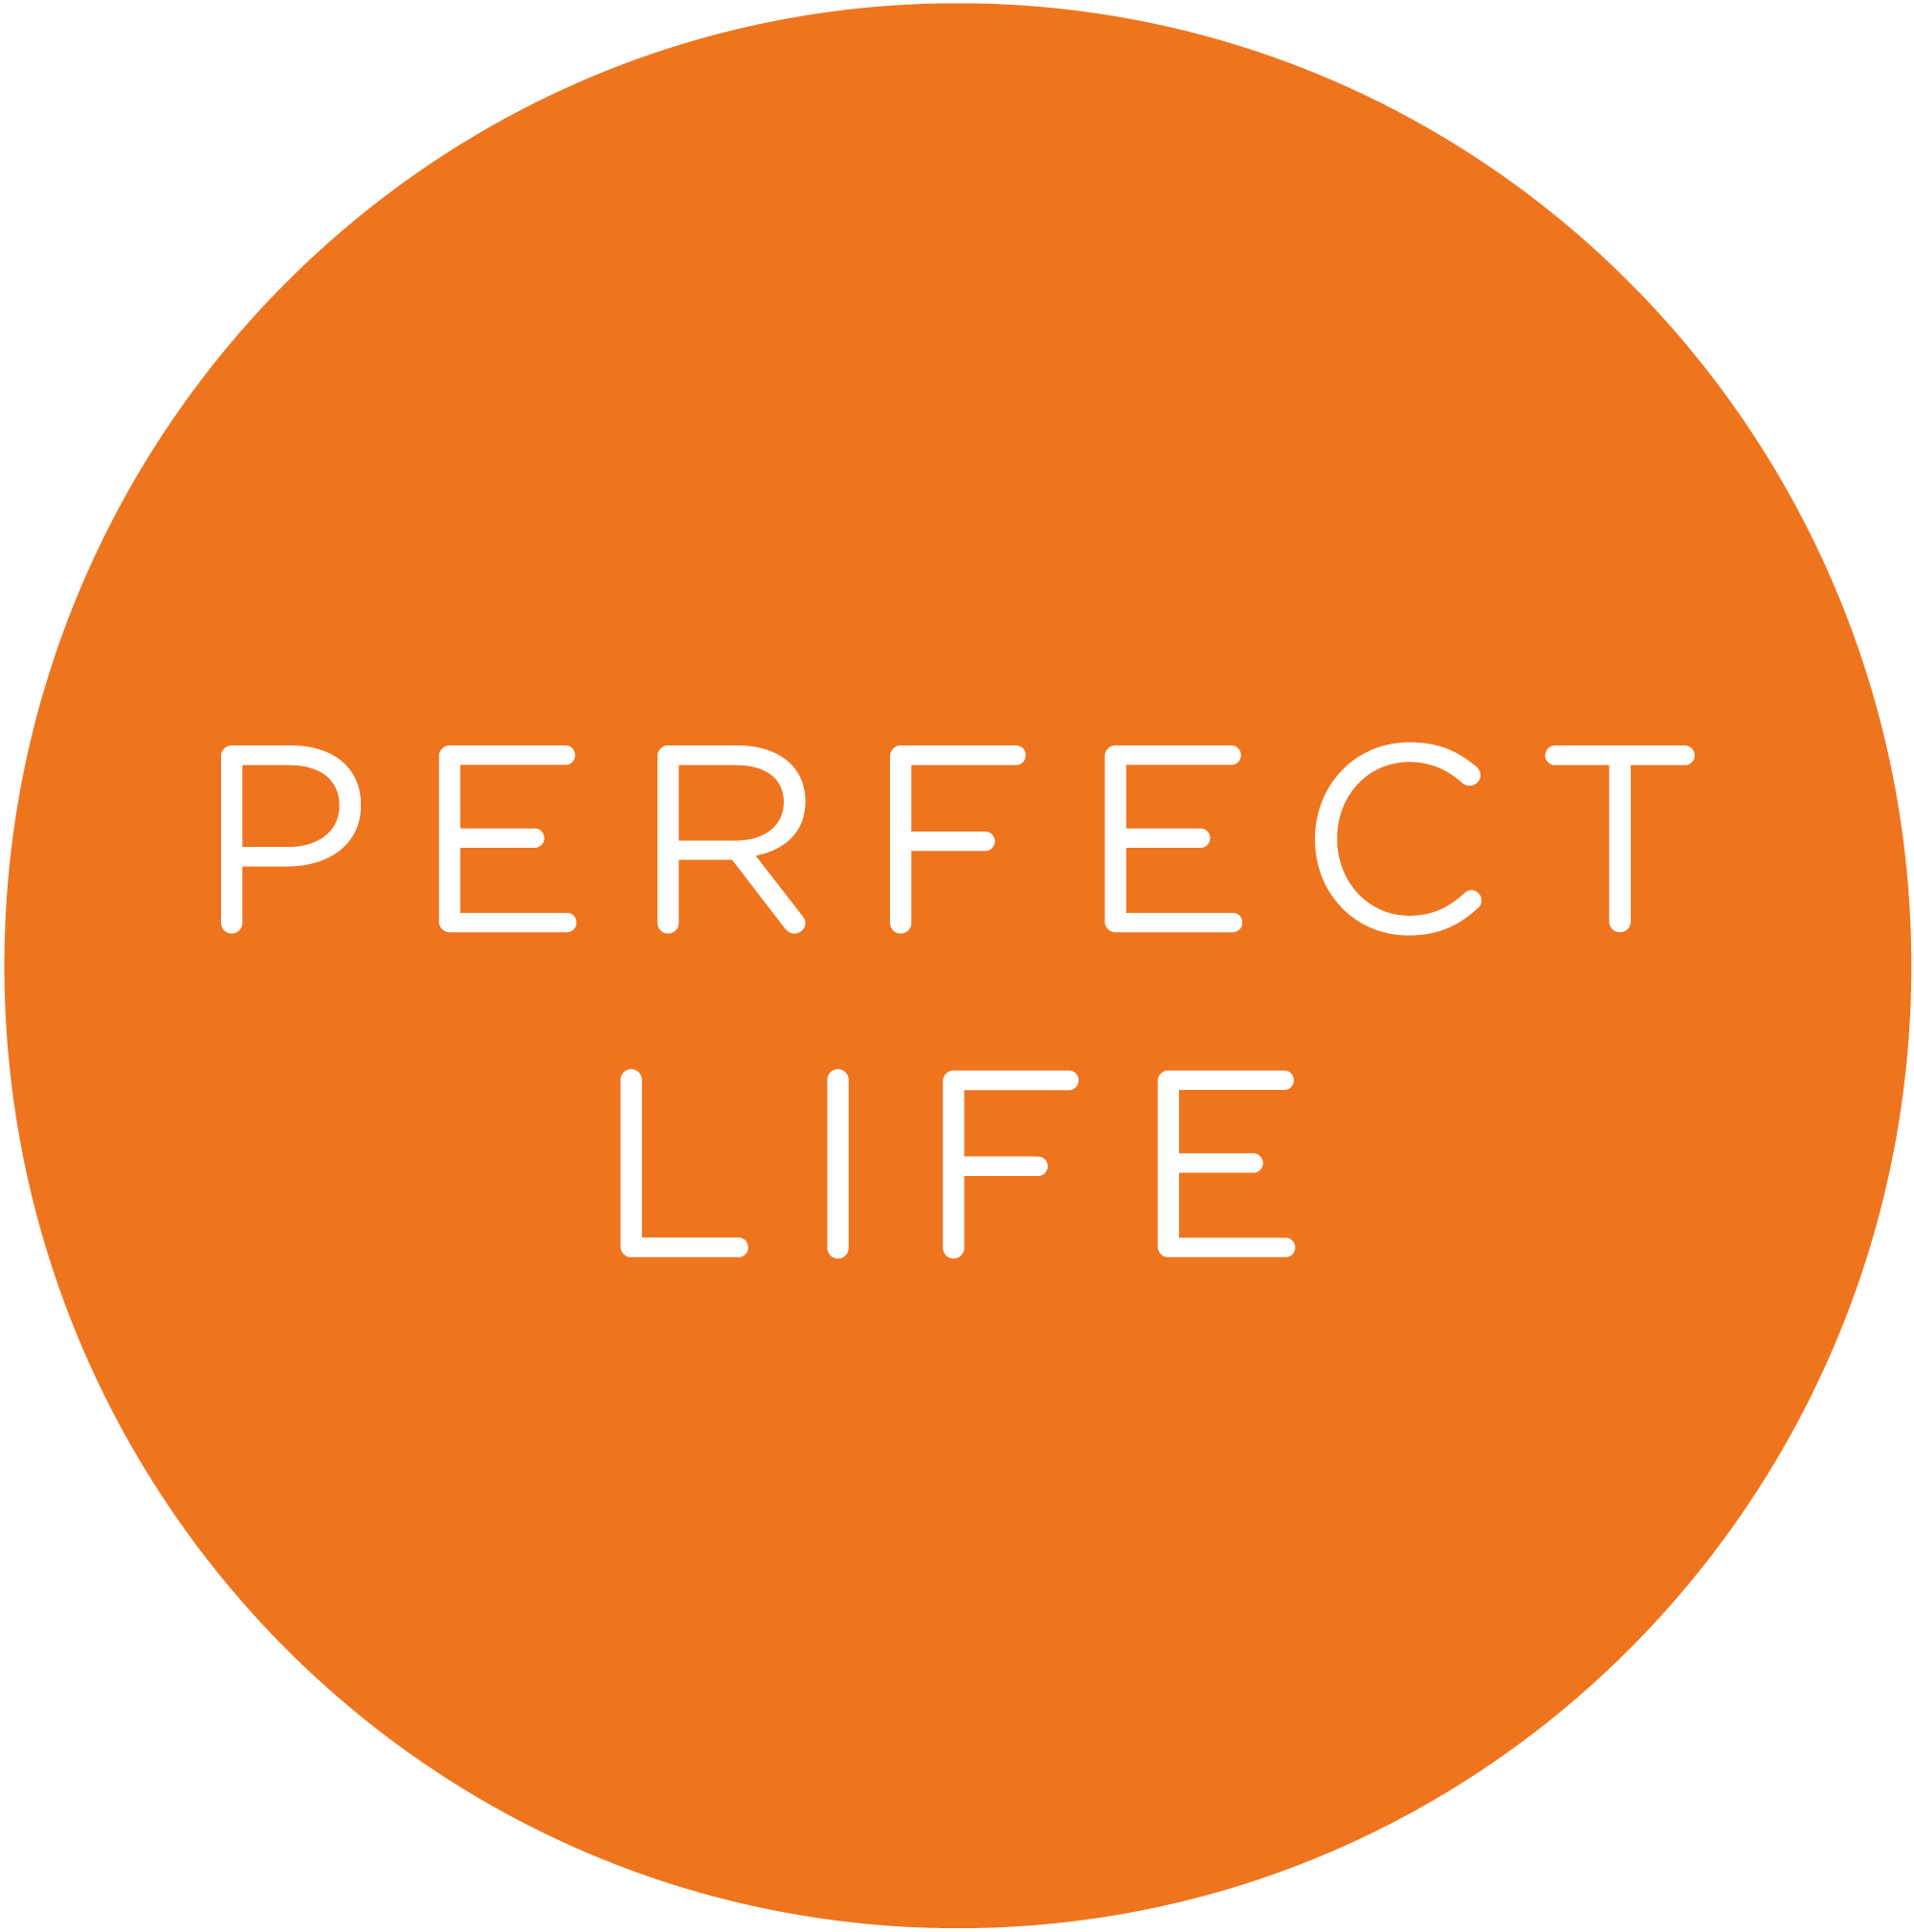 Perfect Life. Perfect Life канал. Perfect Life видео. Перфект лайф песни.